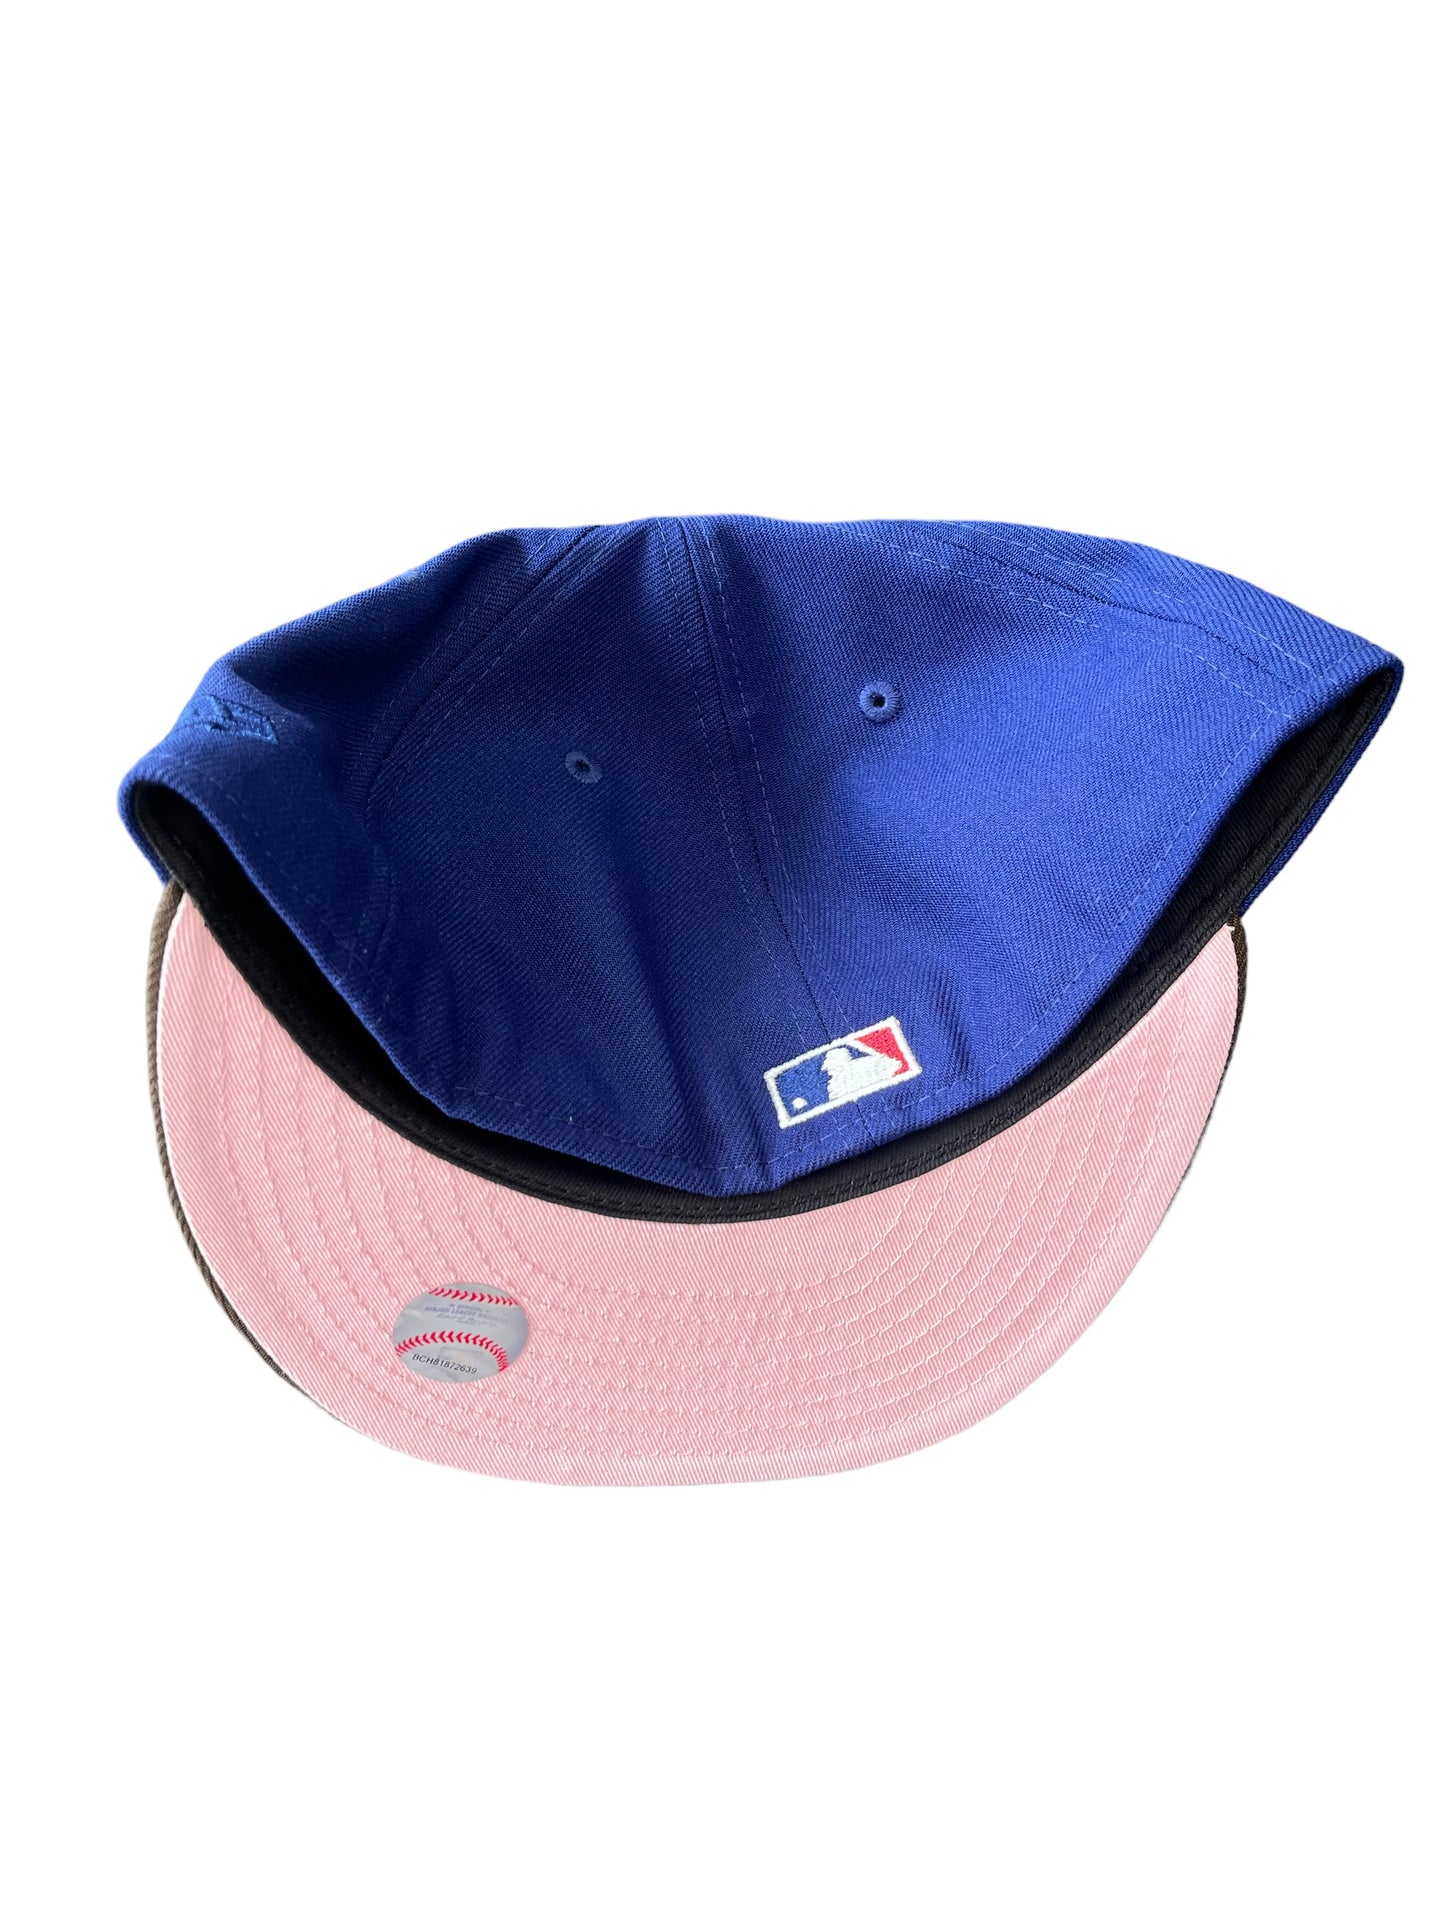 Houston Astros “Blue / Brown” Hat